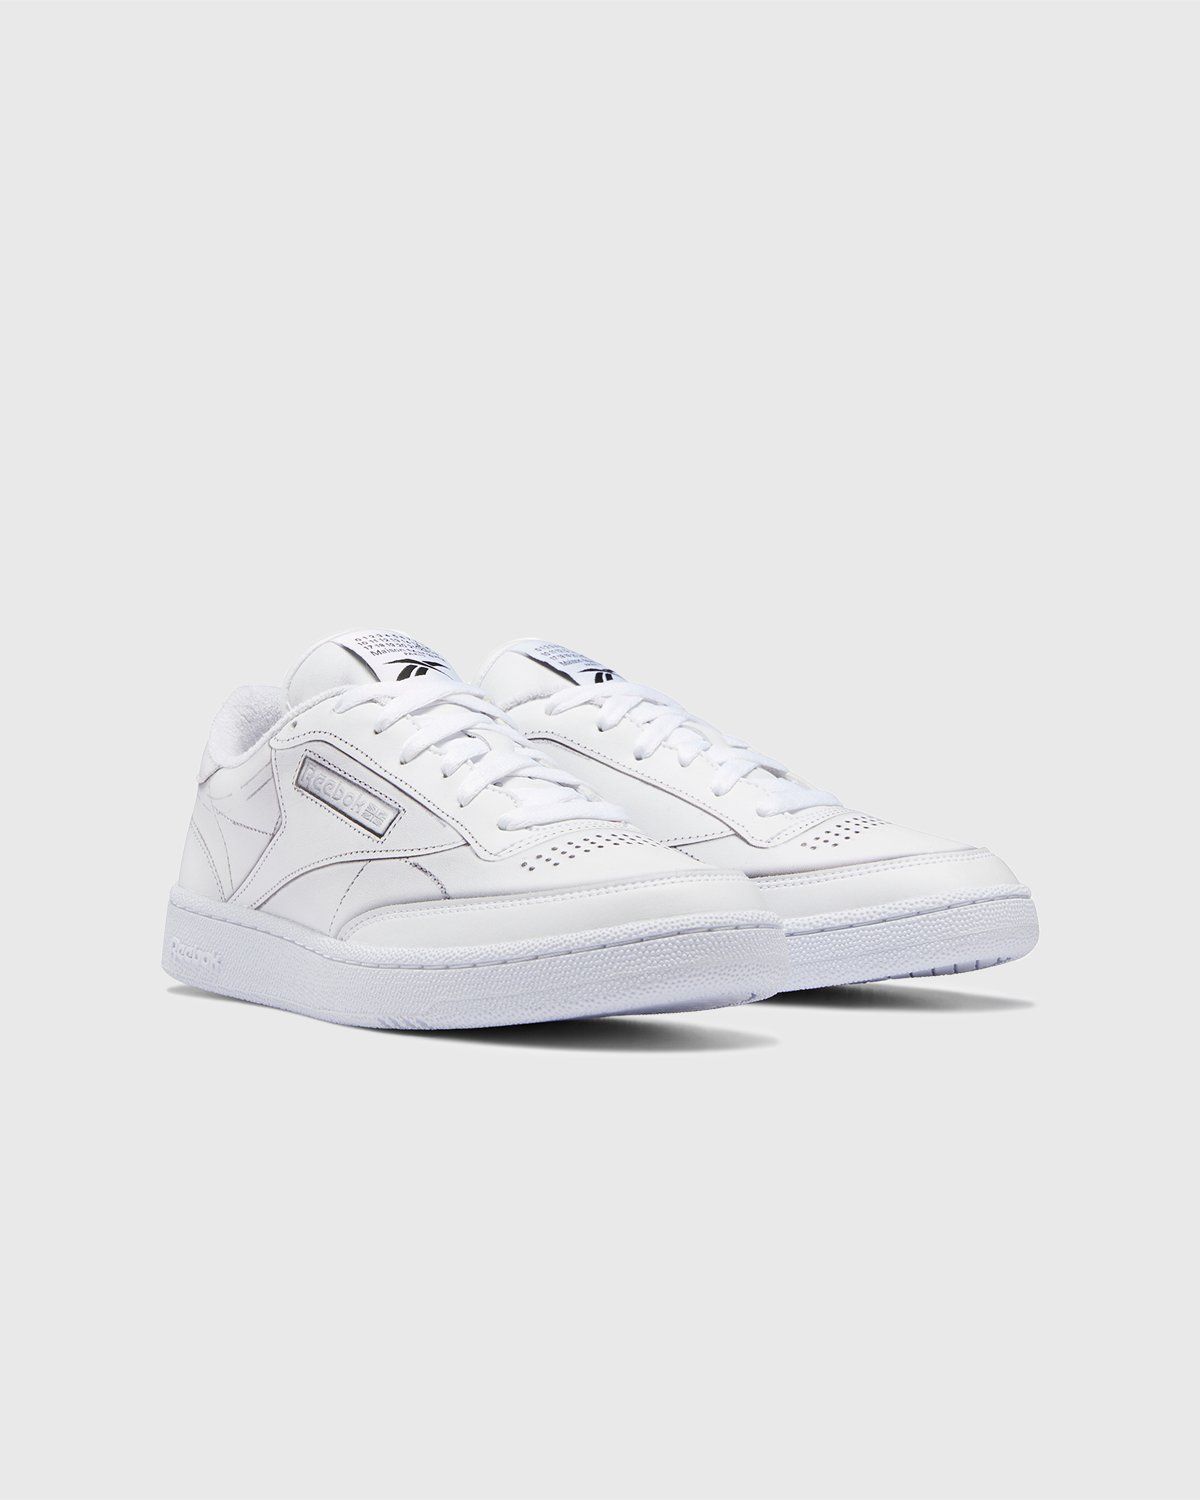 Maison Margiela x Reebok – Club C Trompe L’Oeil White - Low Top Sneakers - White - Image 2